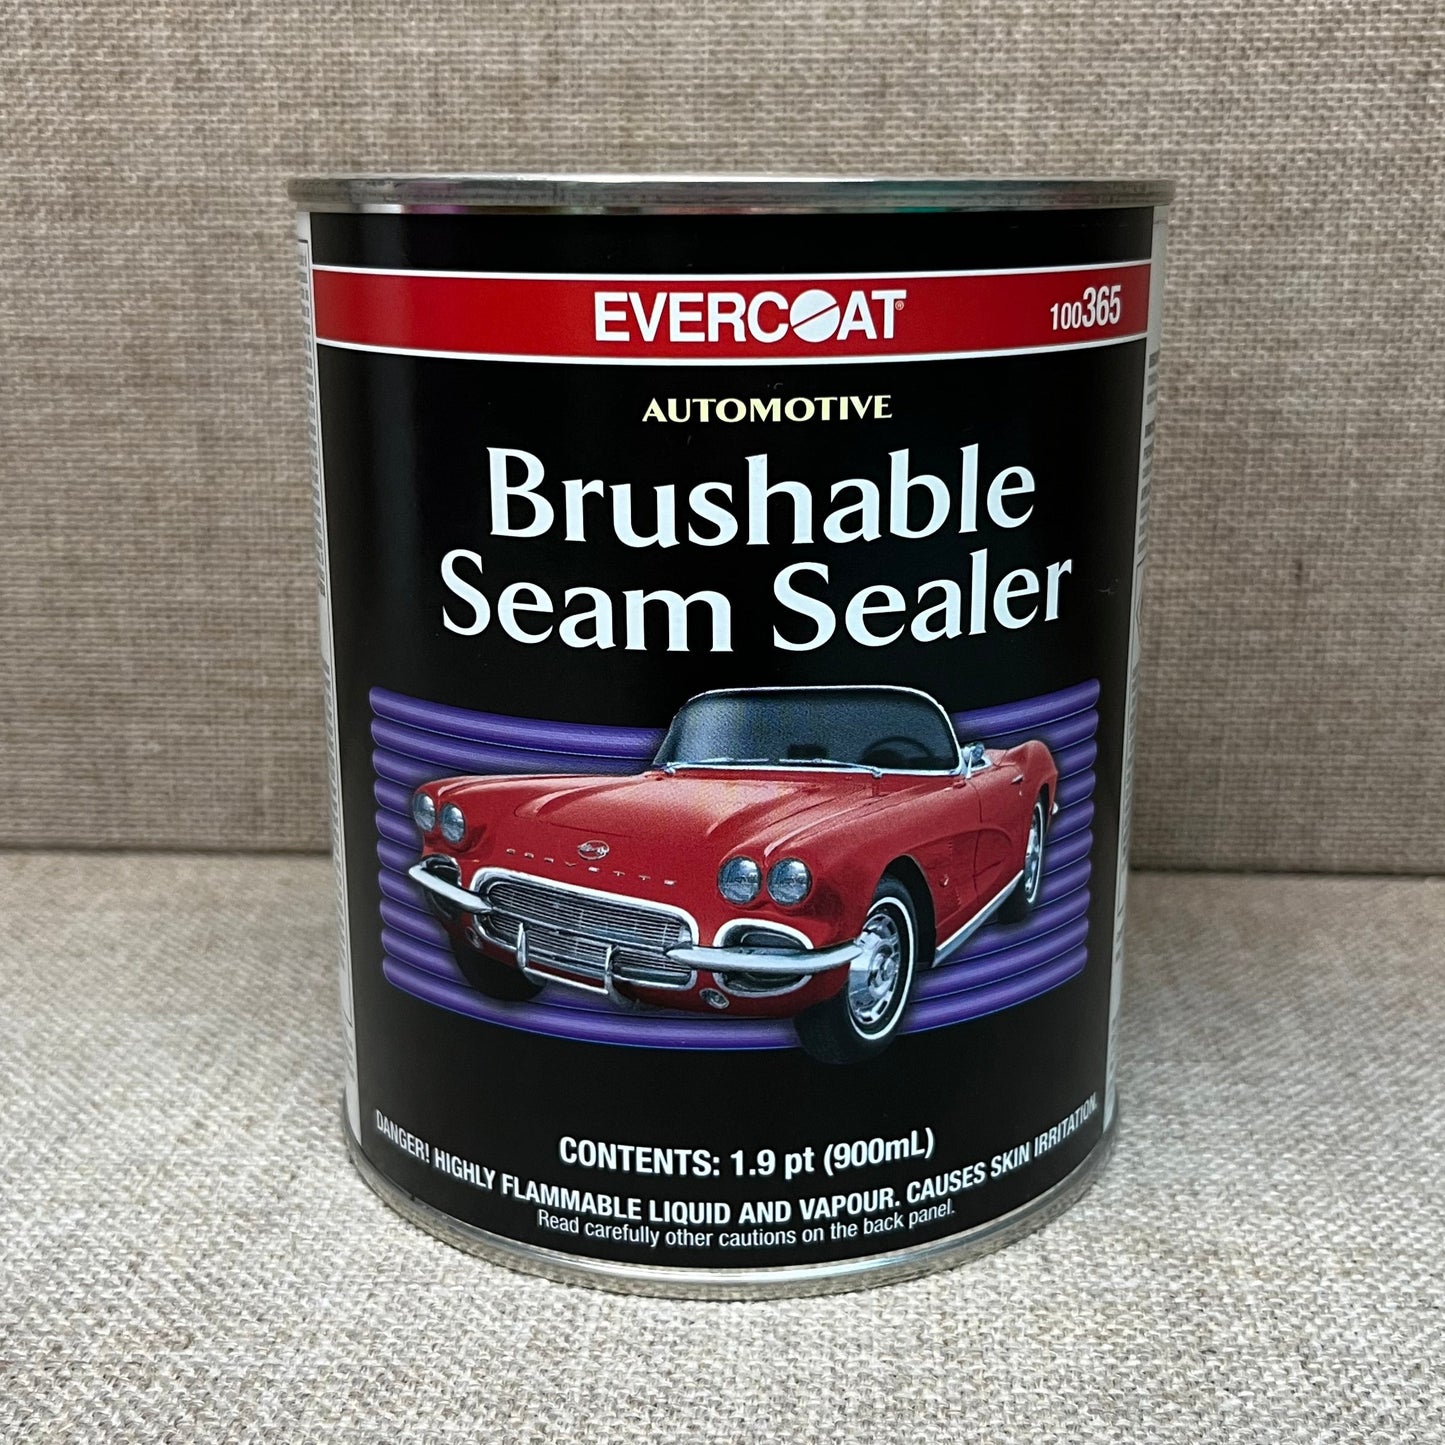 Evercoat Brushable Seam Sealer (100365) 32 Fl oz